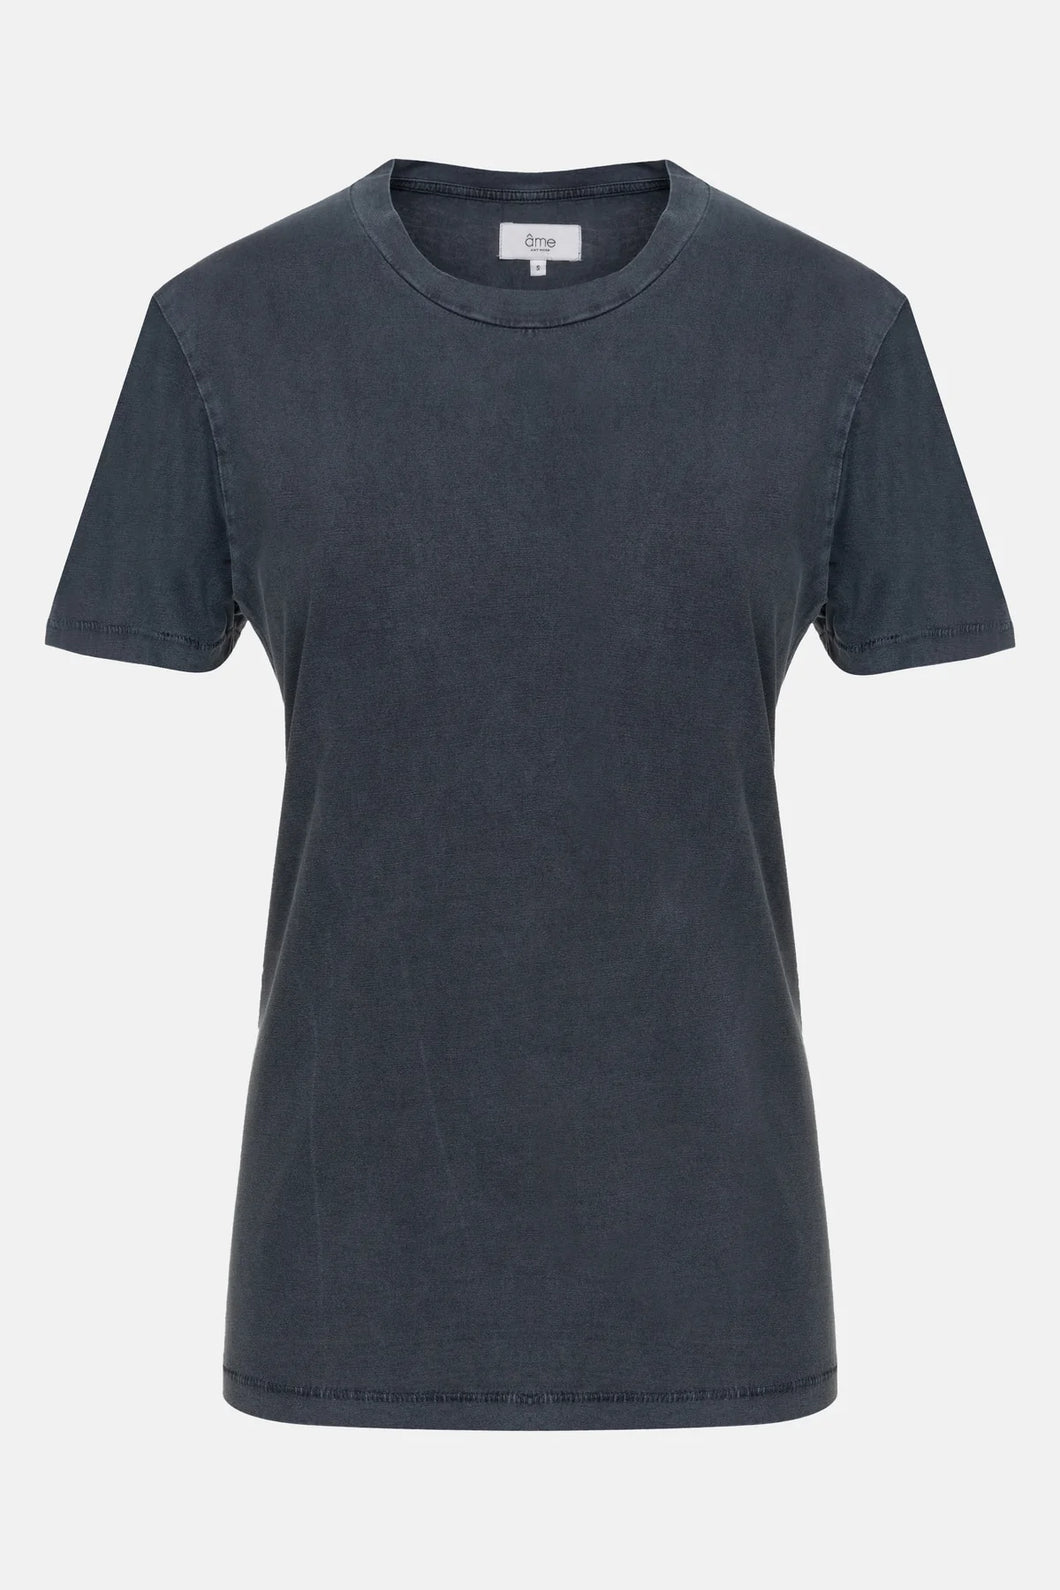 Âme Antwerp Julia Crew Neck T-shirt Short Sleeves Eclipse Blue